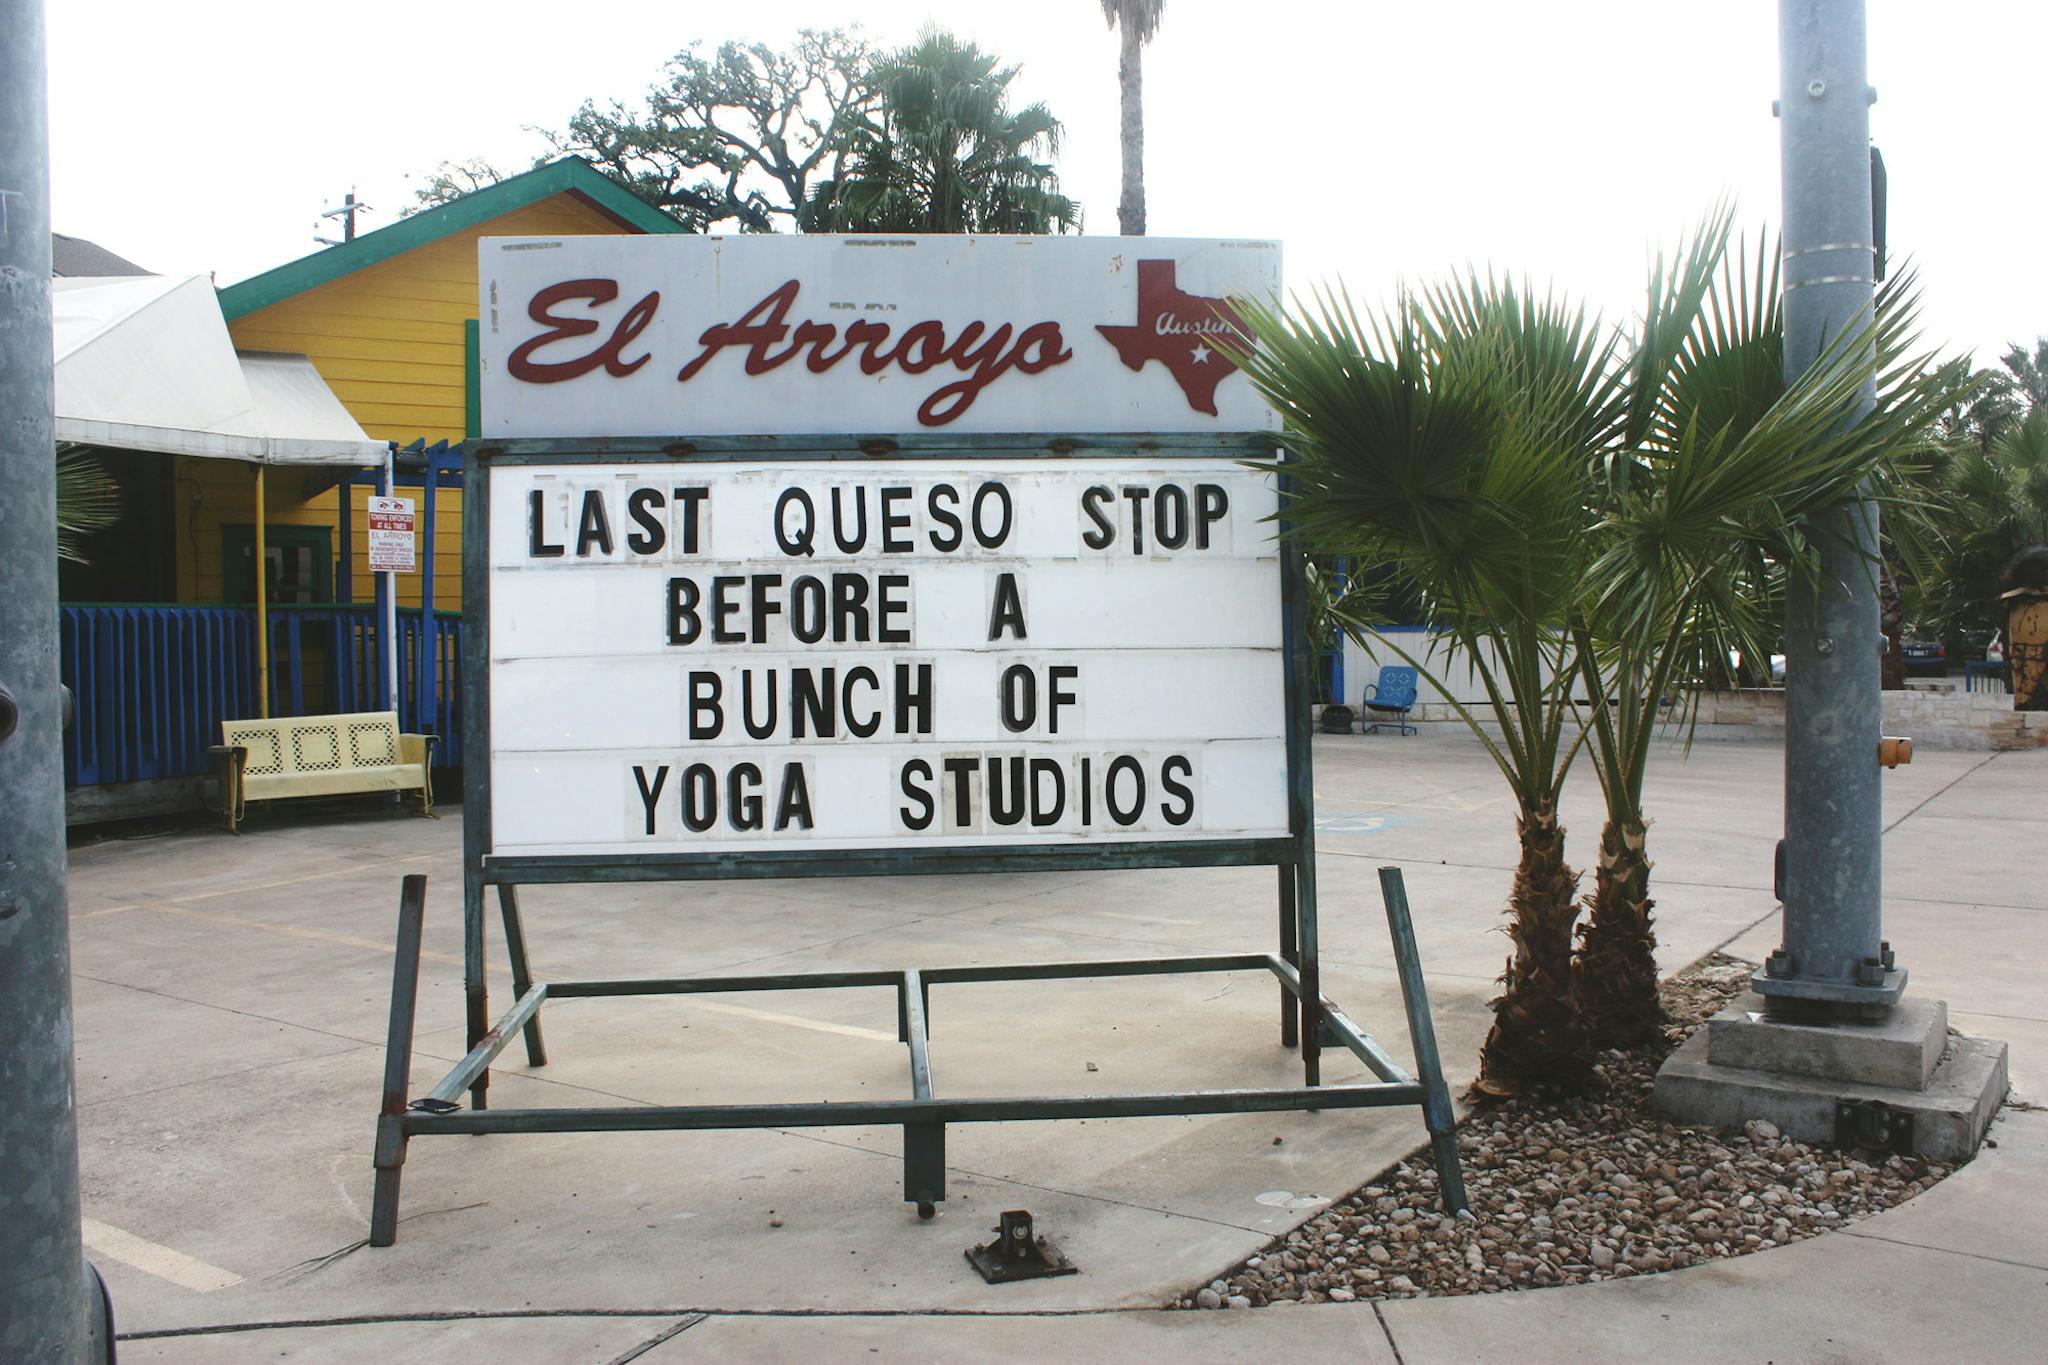 El Arroyo sign says last queso stop before a bunch of yoga studios.